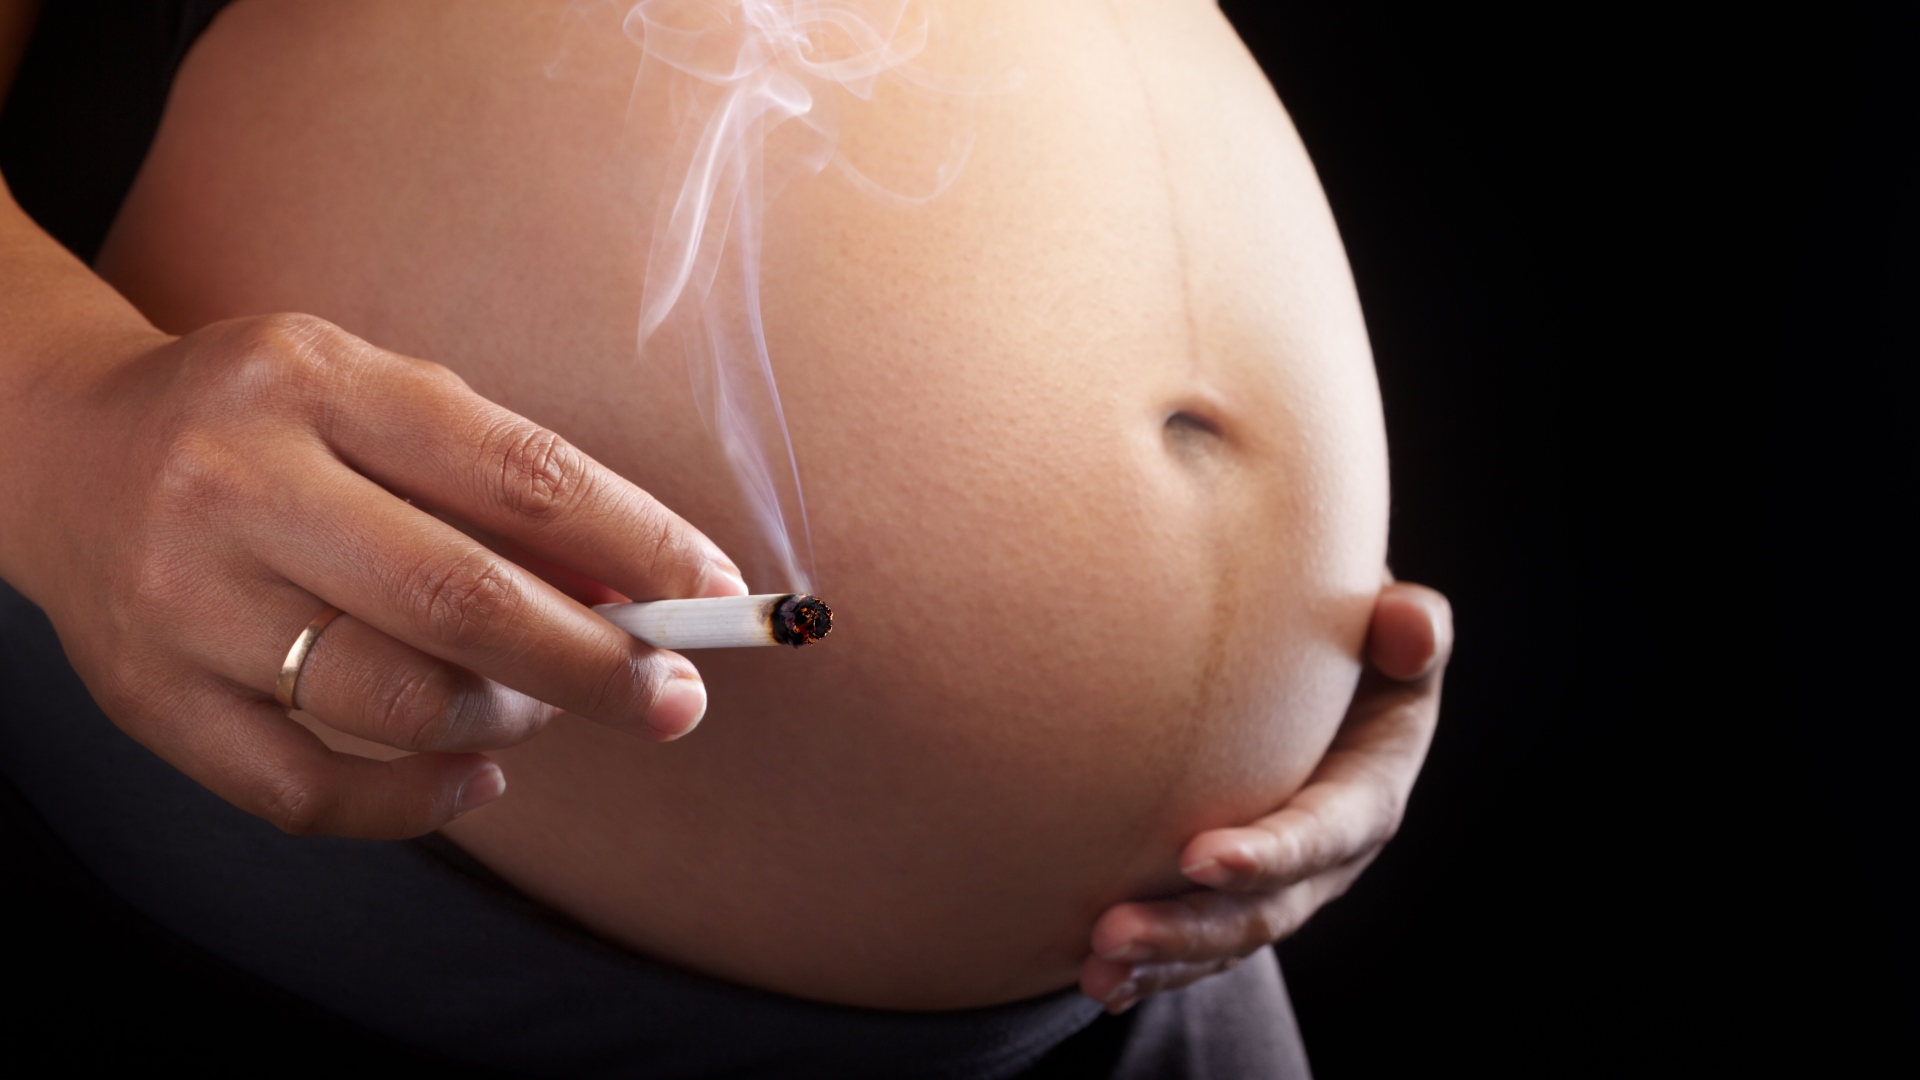 dissertation on smoking during pregnancy